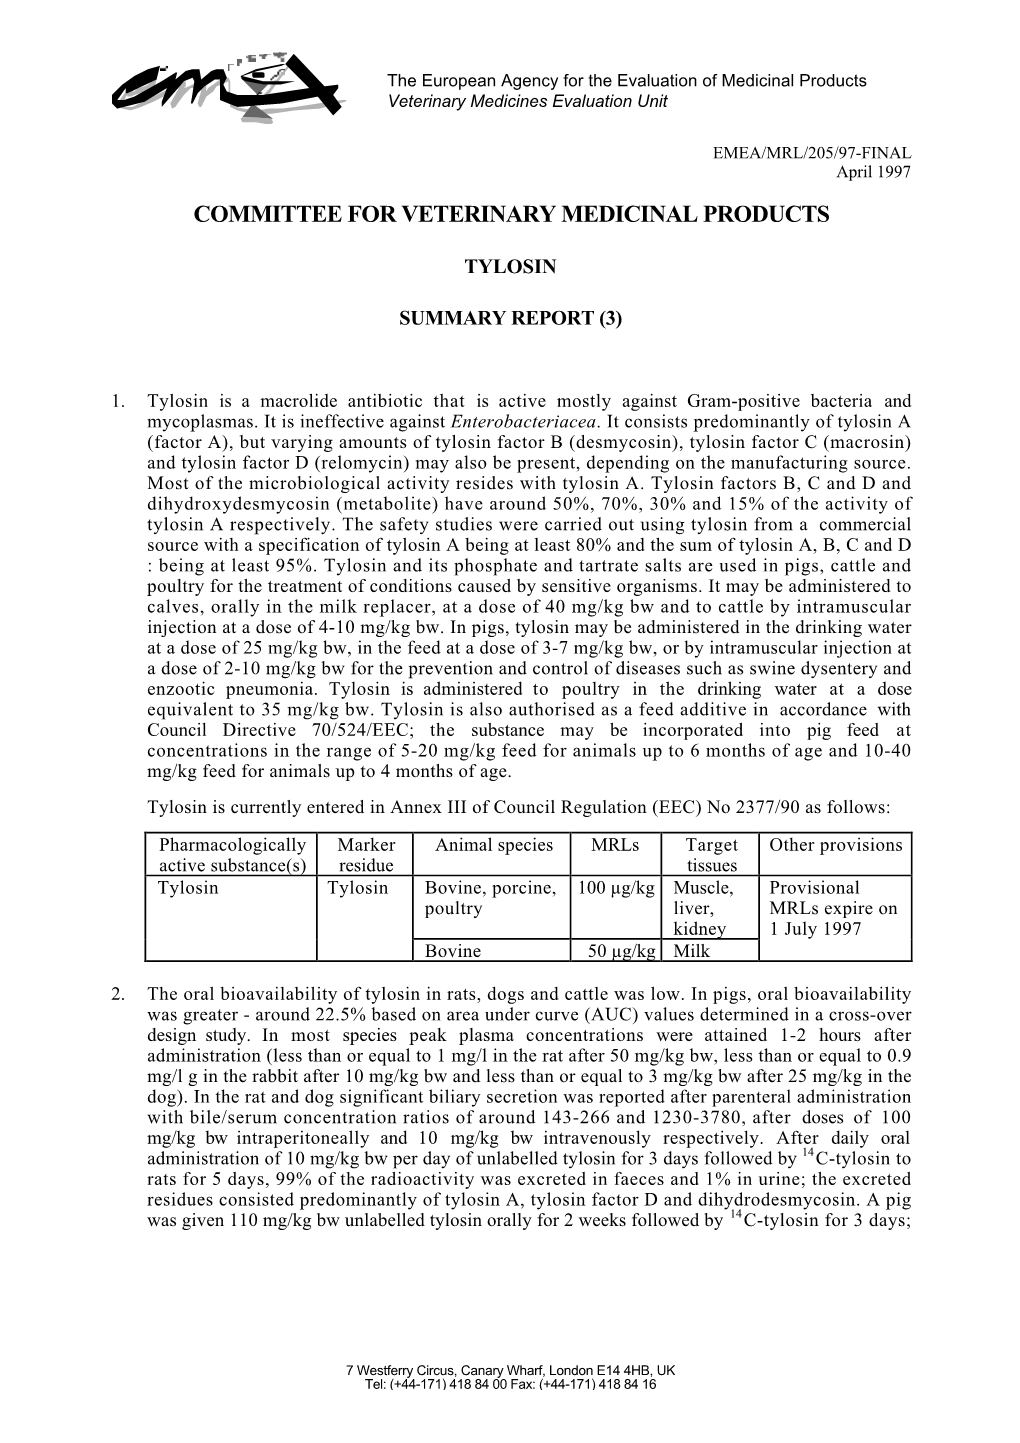 Tylosin-Summary-Report-3-Committee